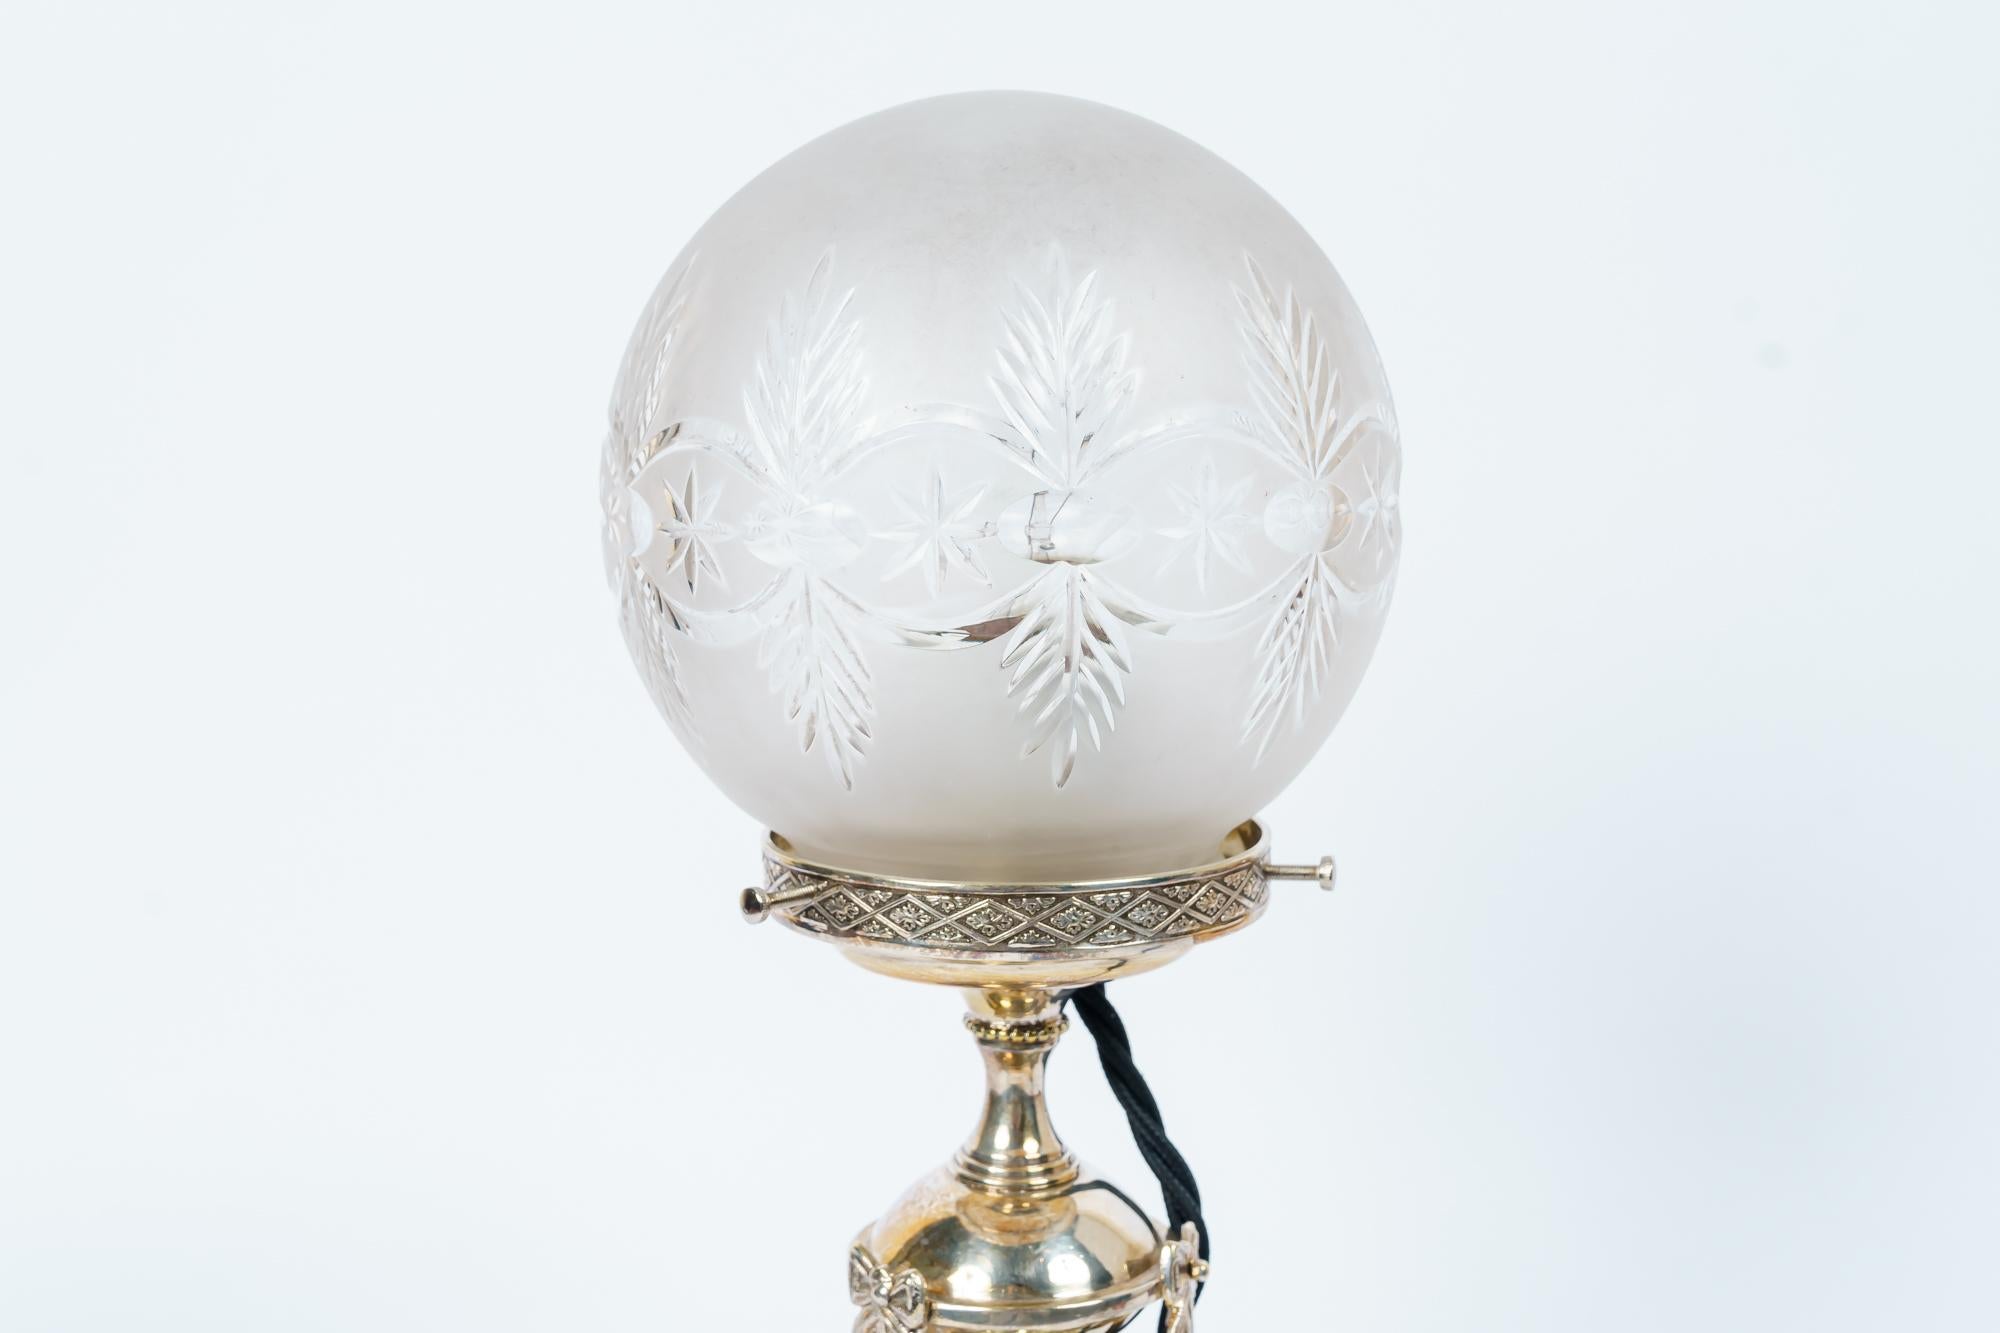 Jugendstil Alpaca table lamp vienna around 1908
Polished
Original cut glass.